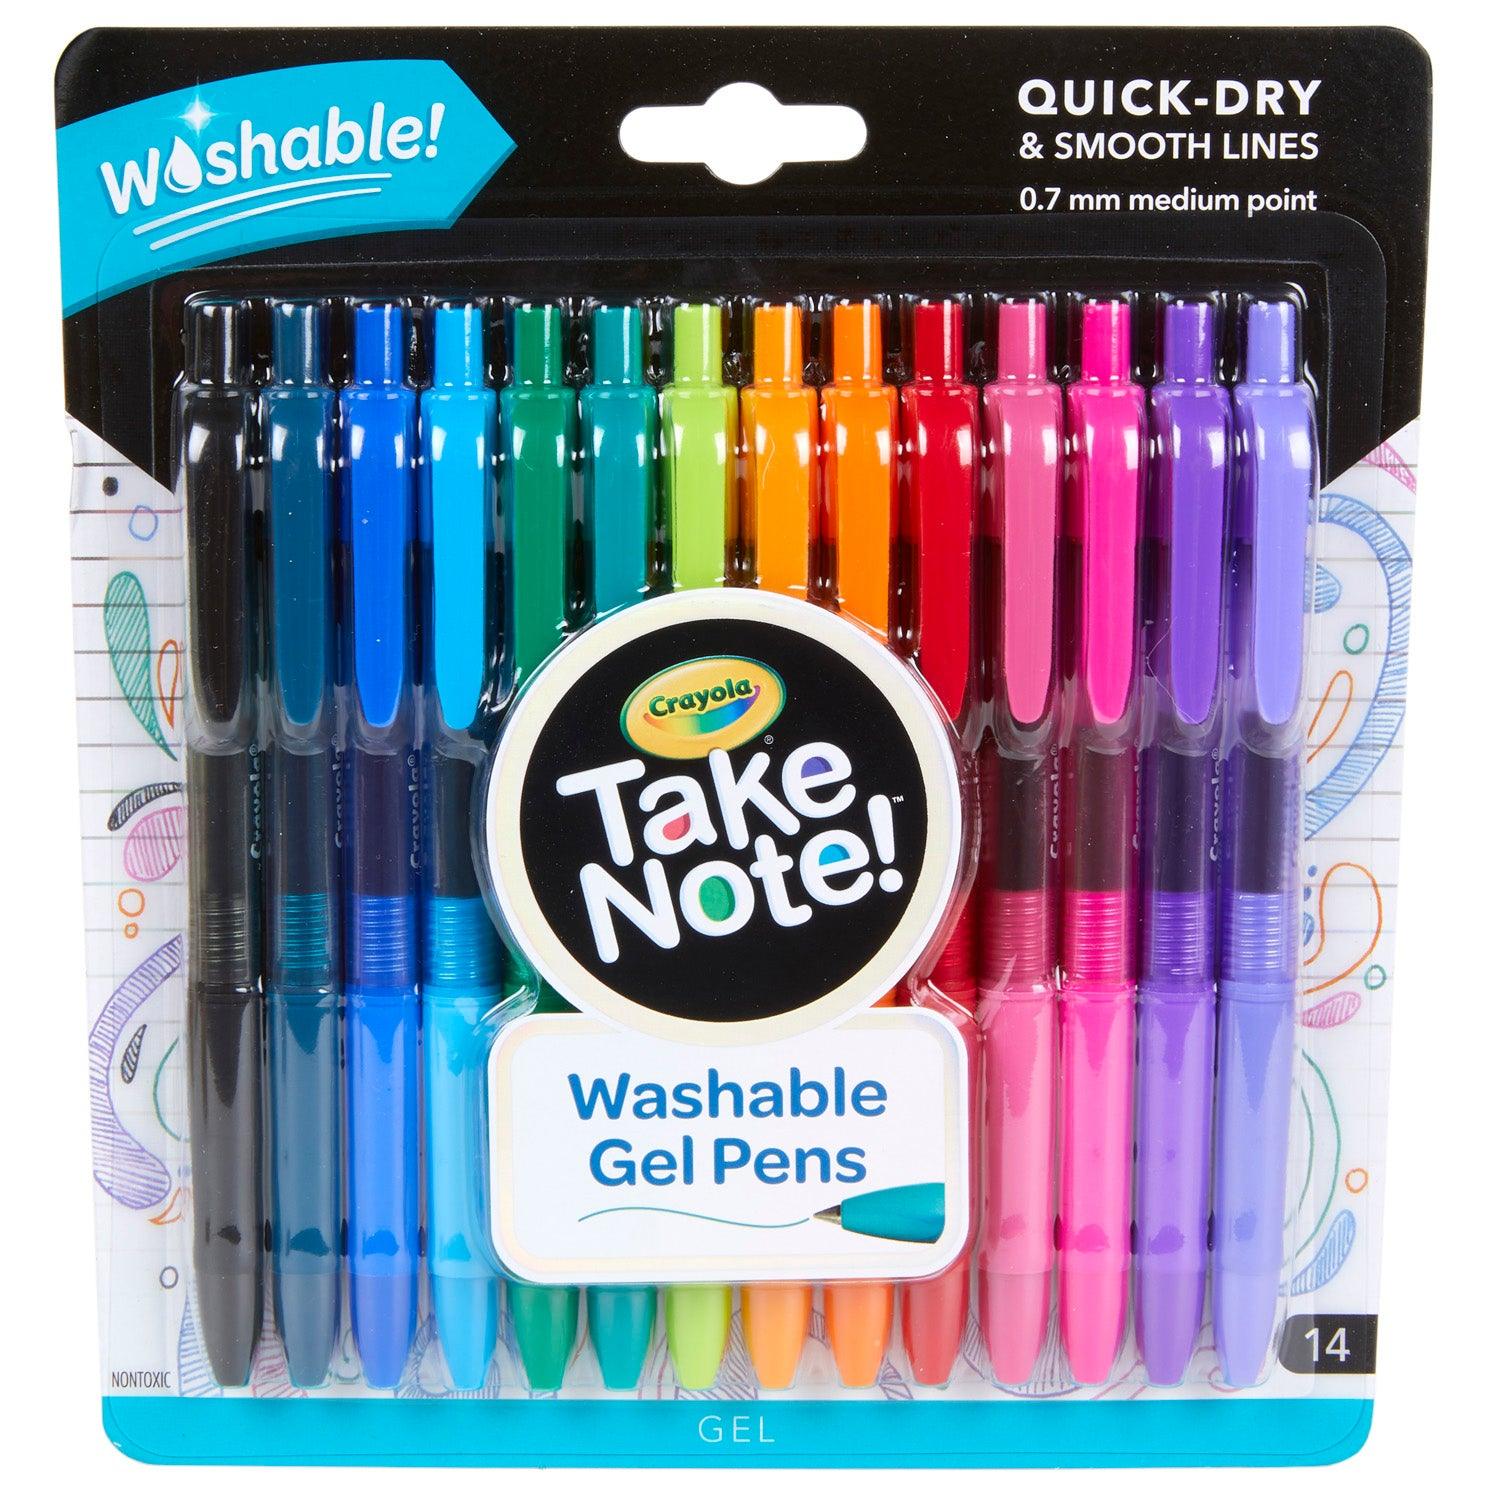 Take Note! Washable Gel Pens, Pack of 14 - Loomini